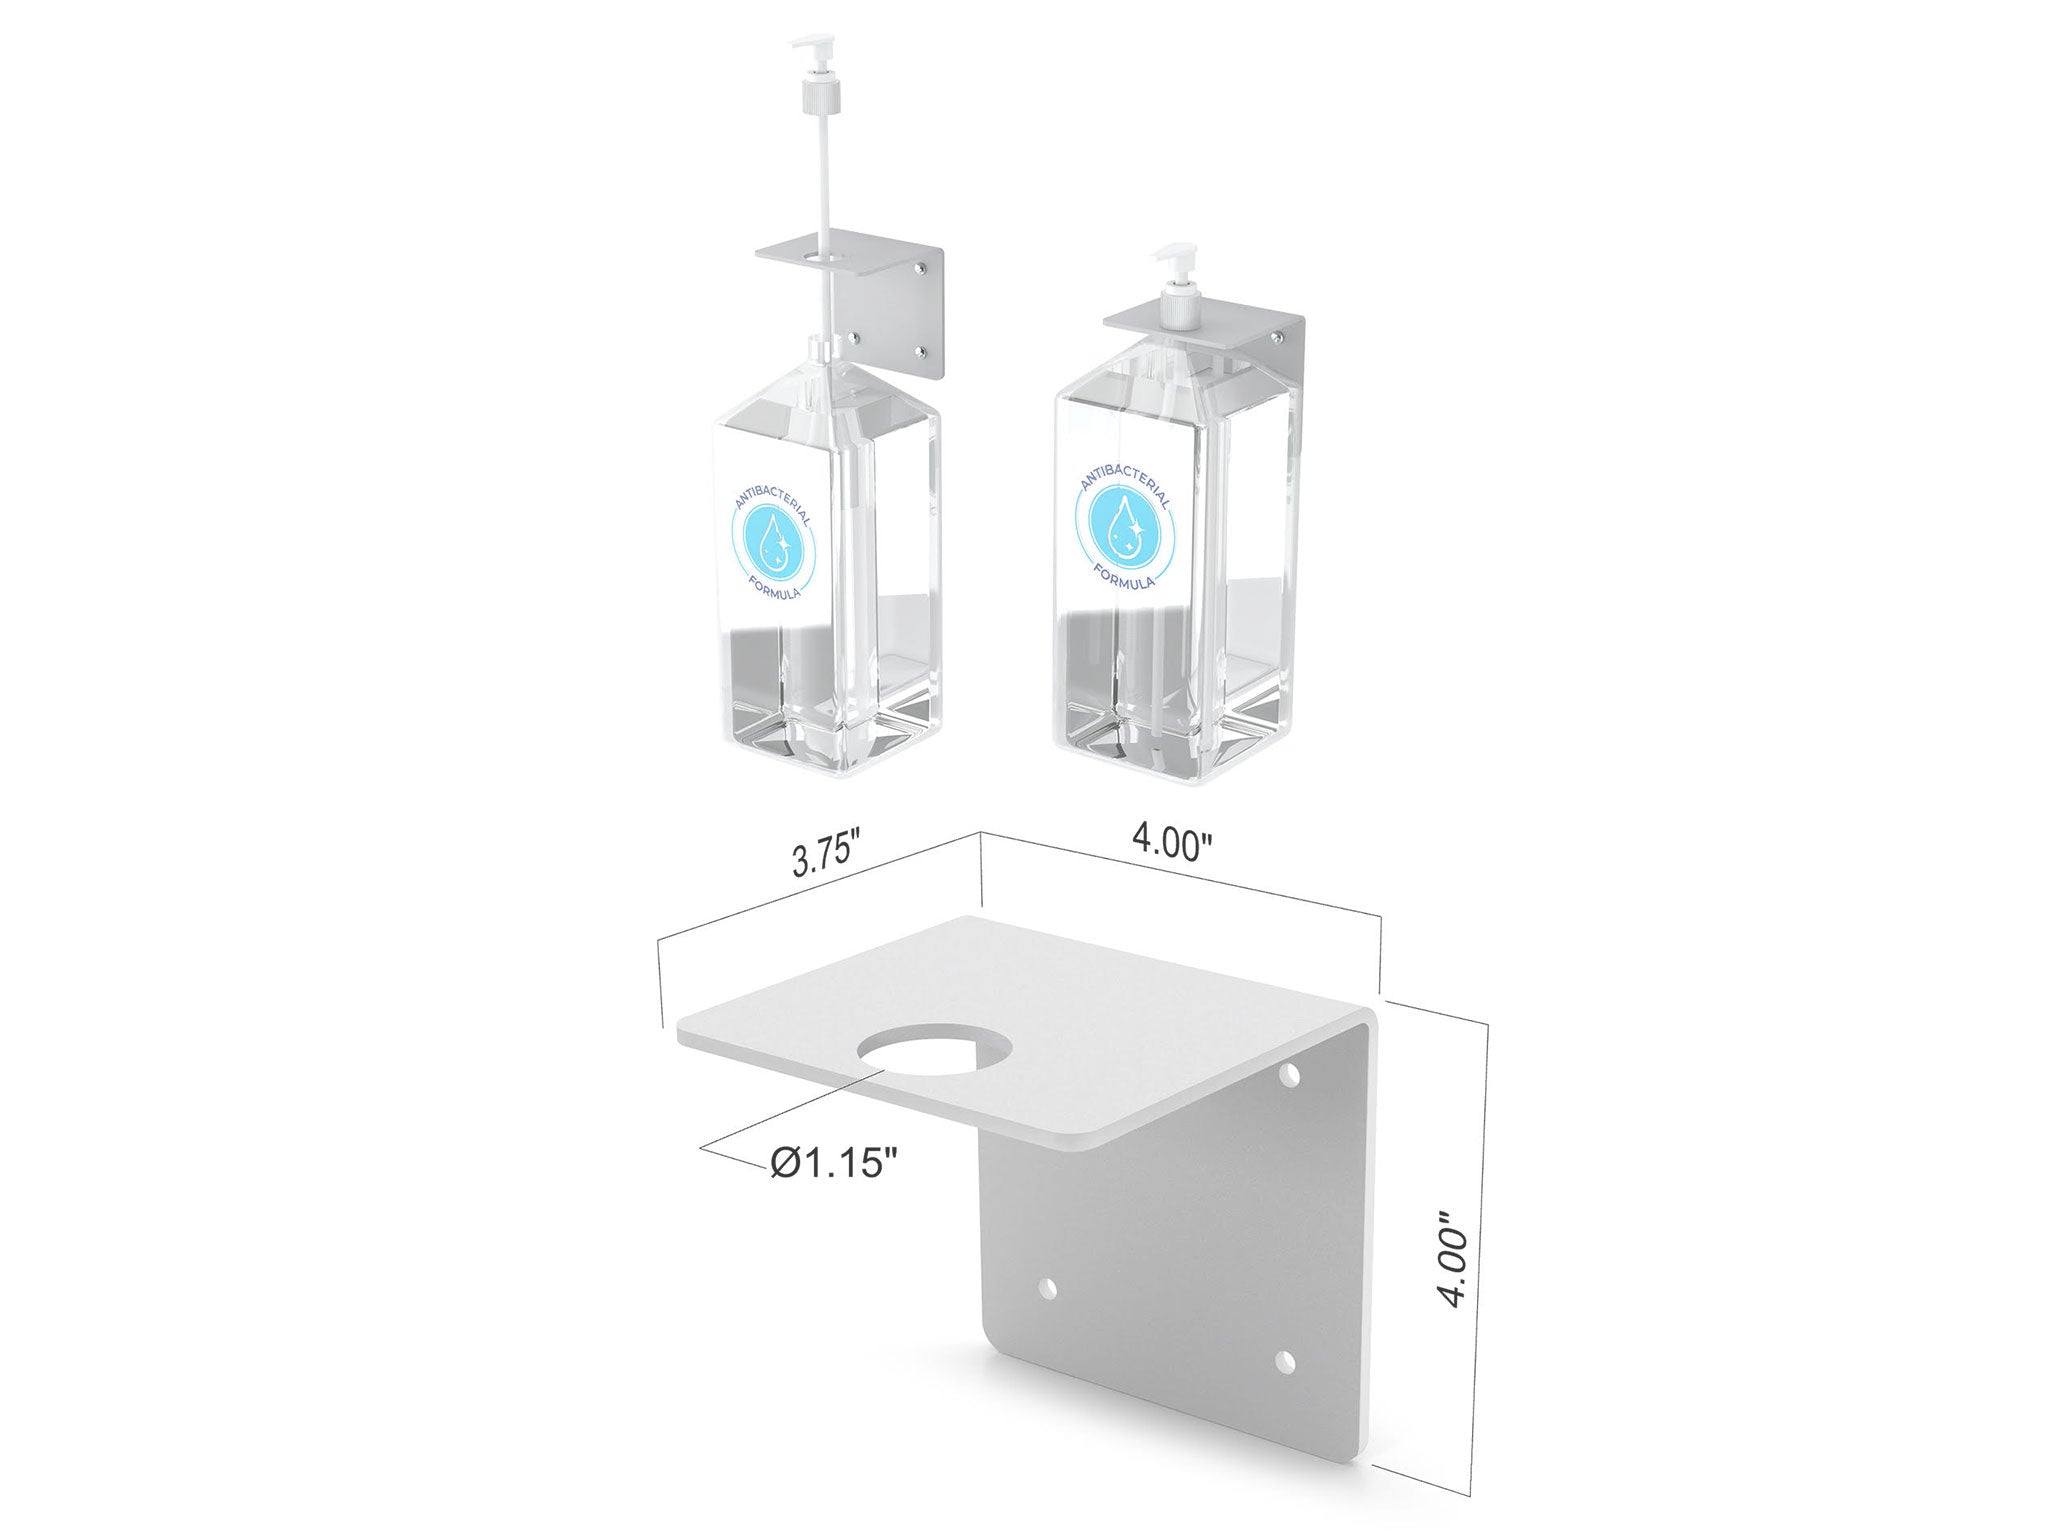 Hand Sanitizer Manual Pump Dispenser Wall Mount Bracket (4 Pack